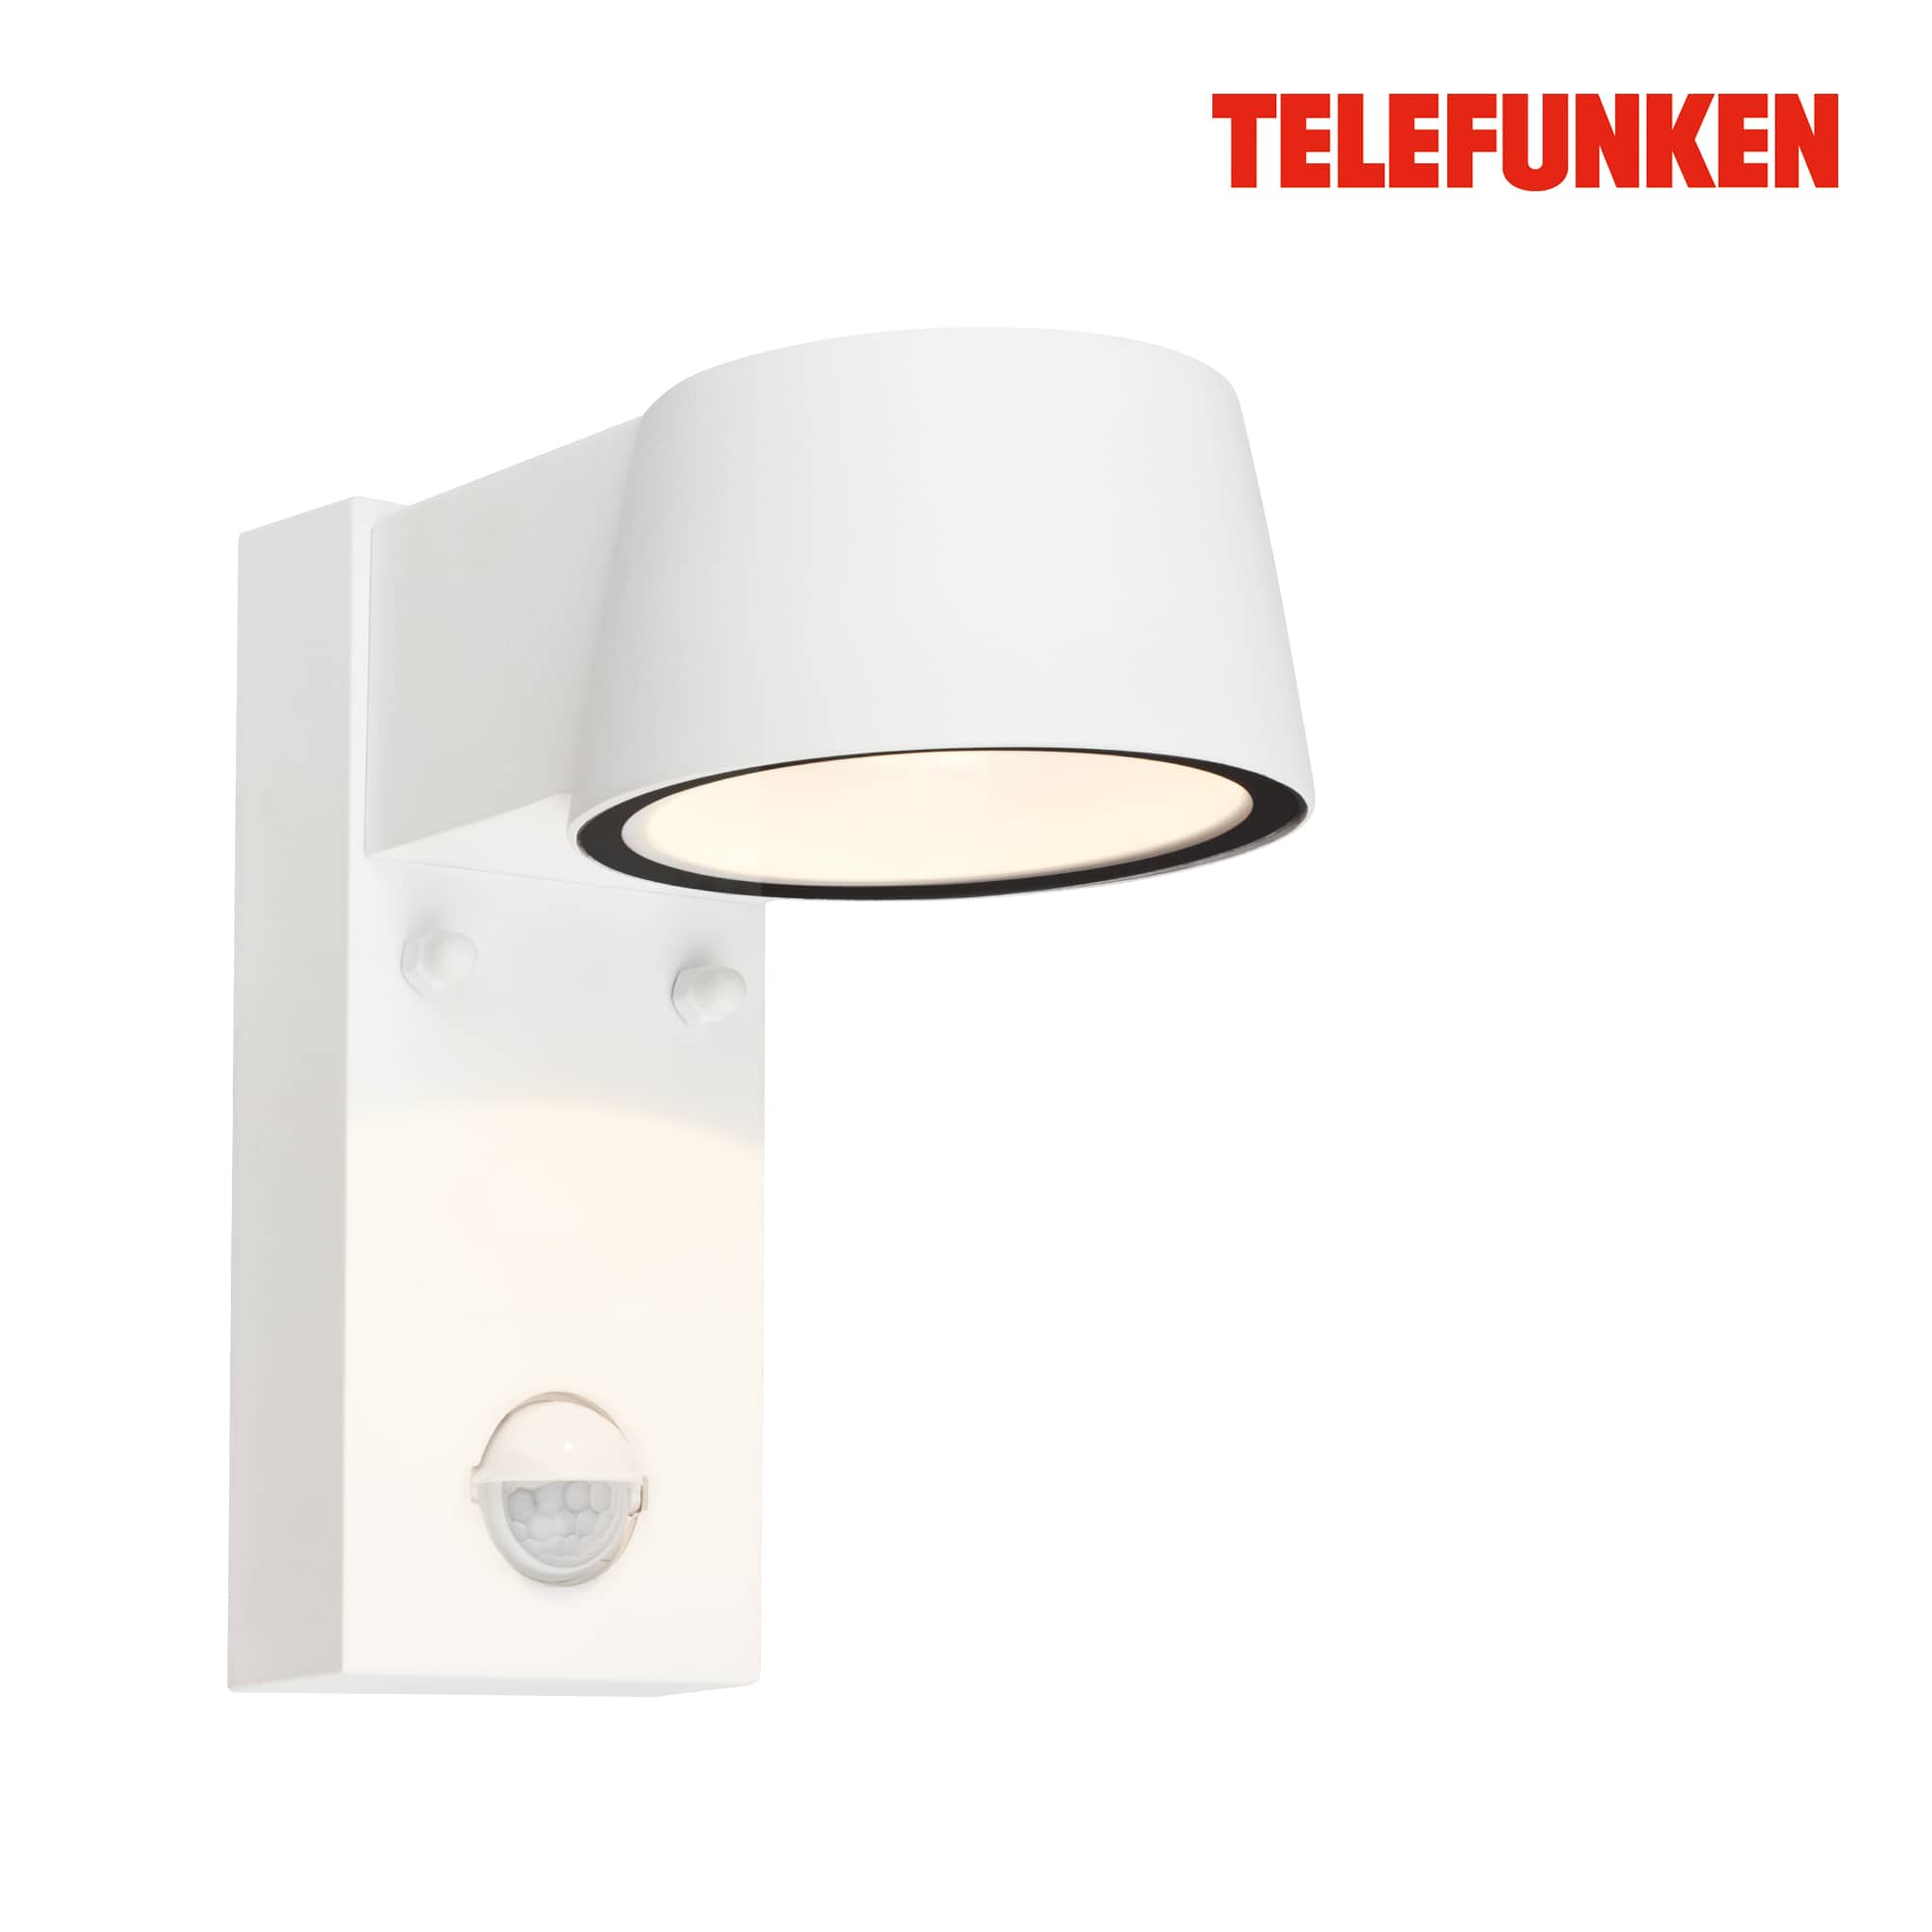 Telefunken LED wandlamp, bewegingsmelder, schemersensor, wit